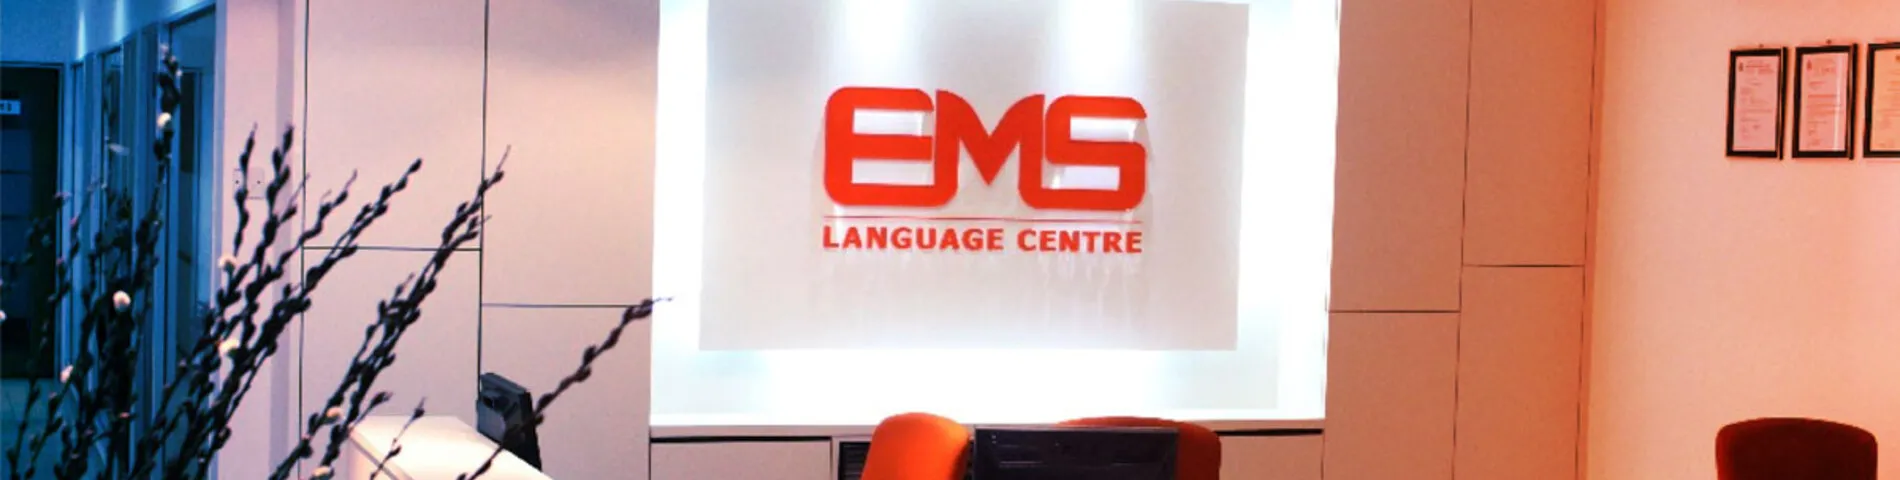 EMS - English Made Simple Language Centre 사진 1